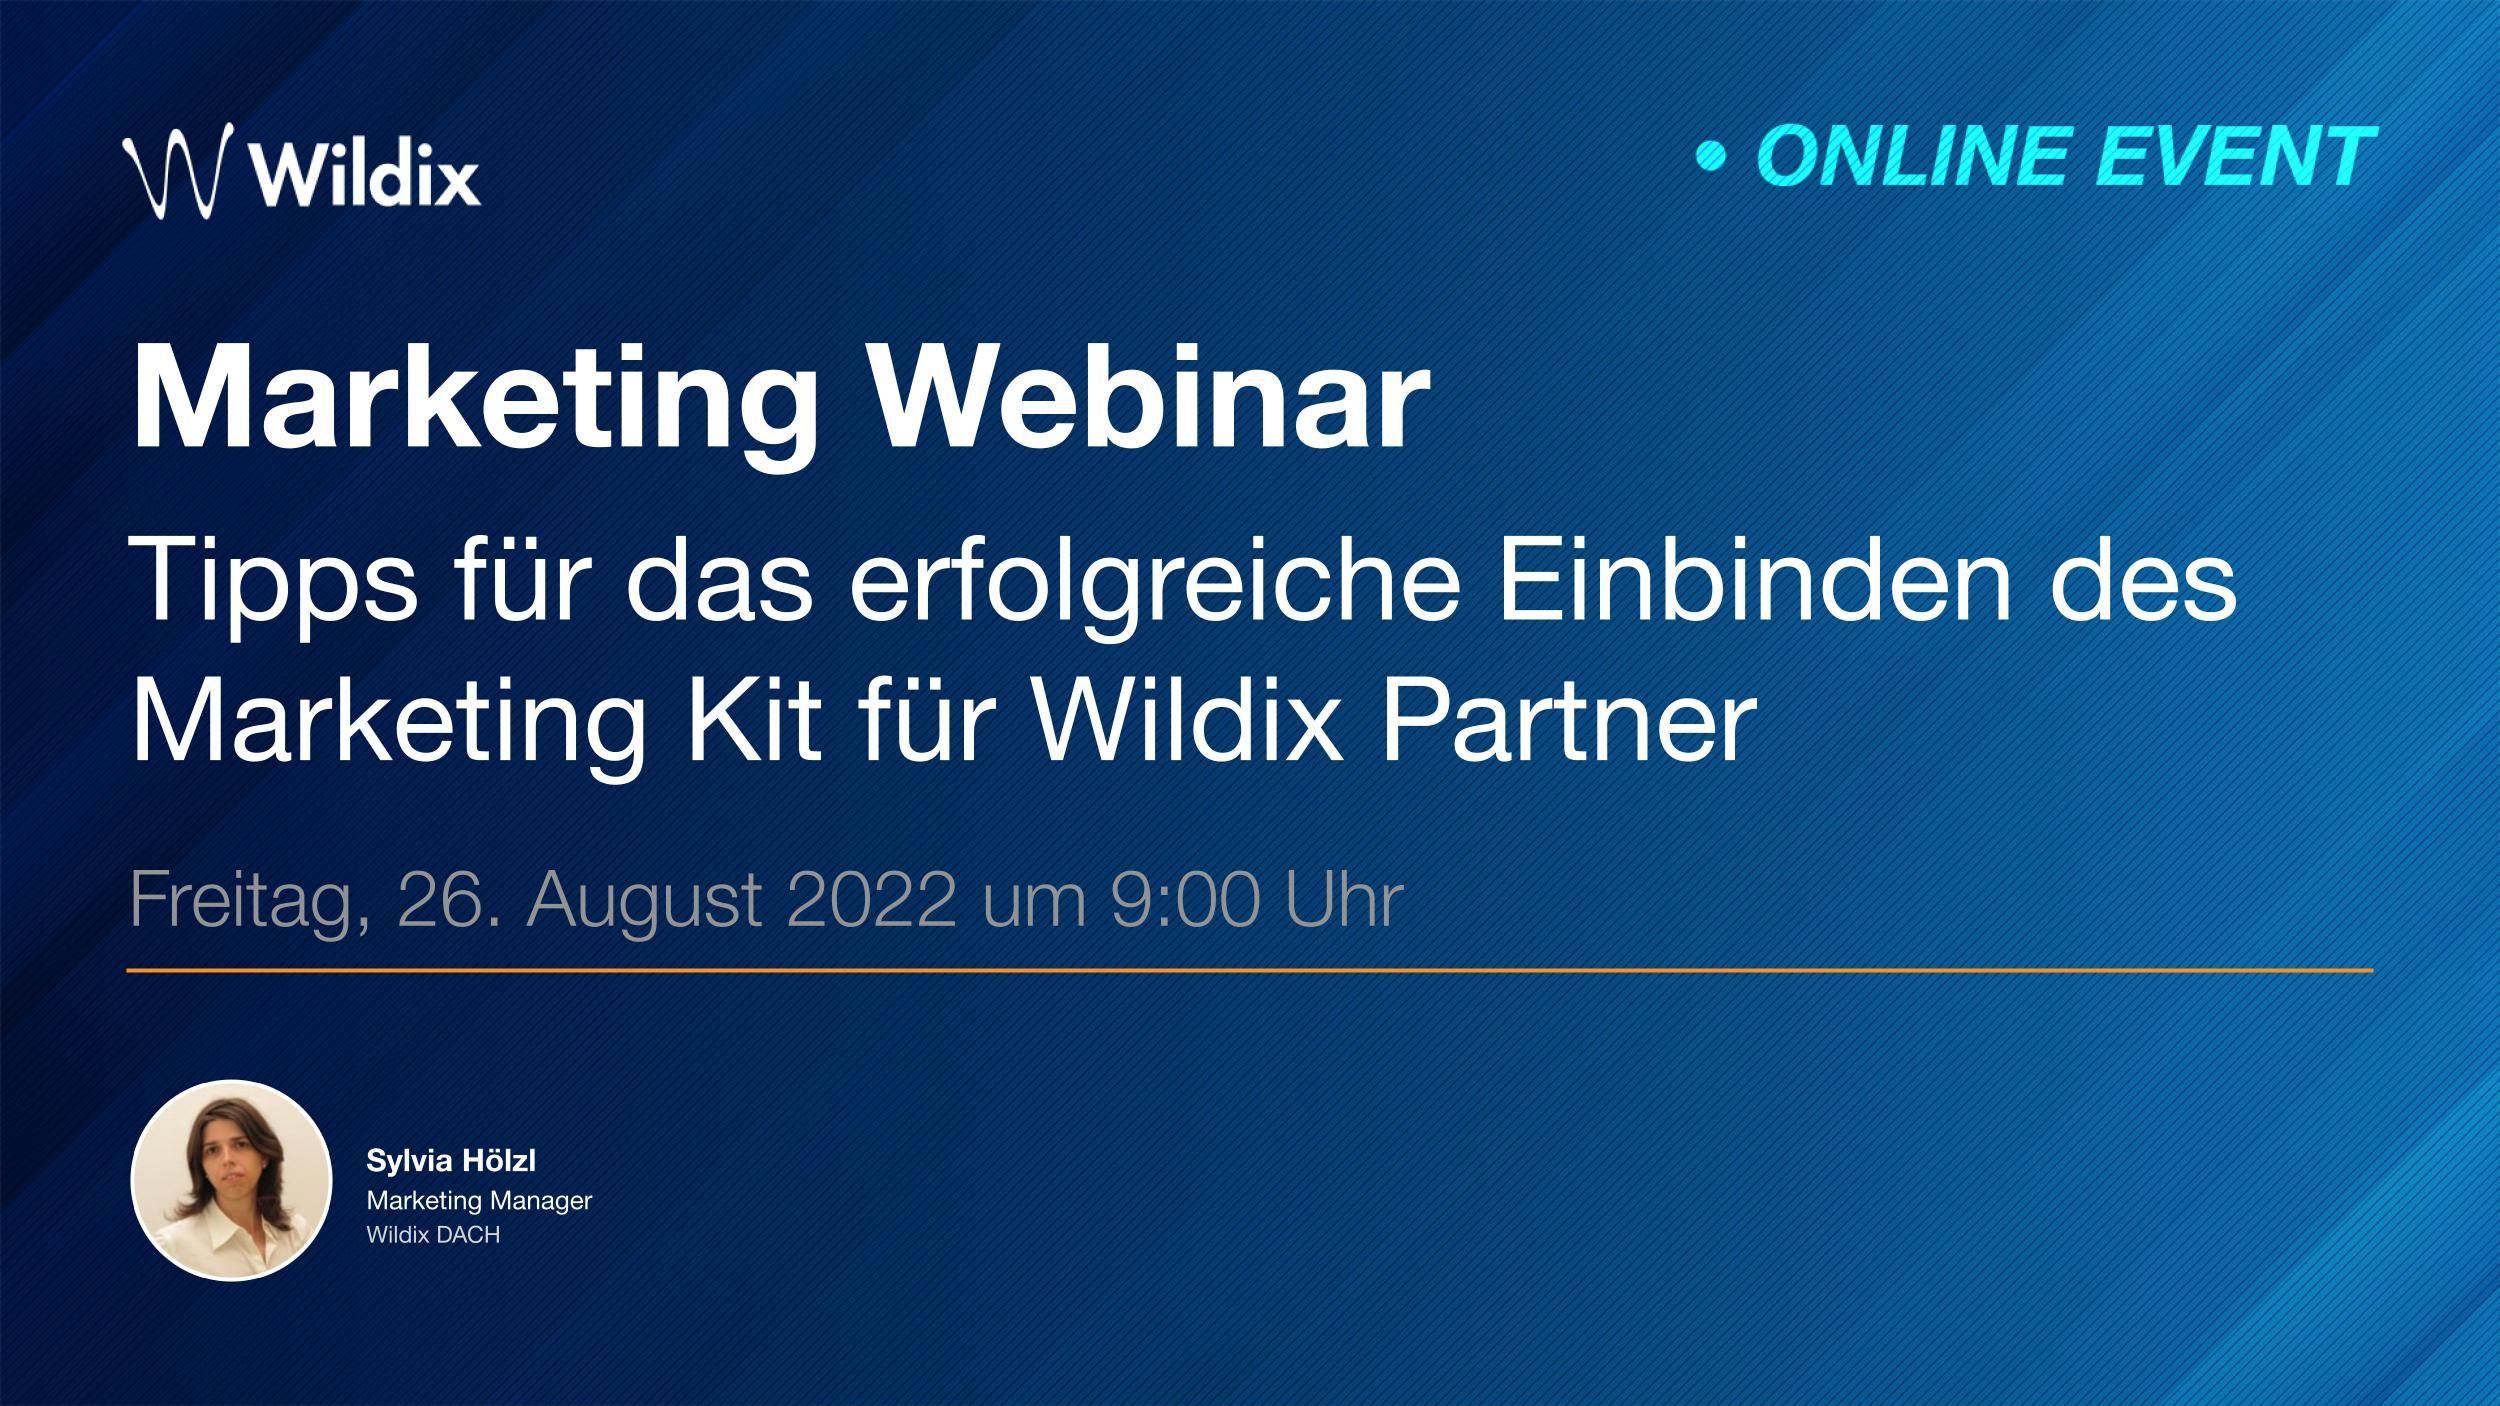 wildix-marketing-webinar-2022-08-26-1